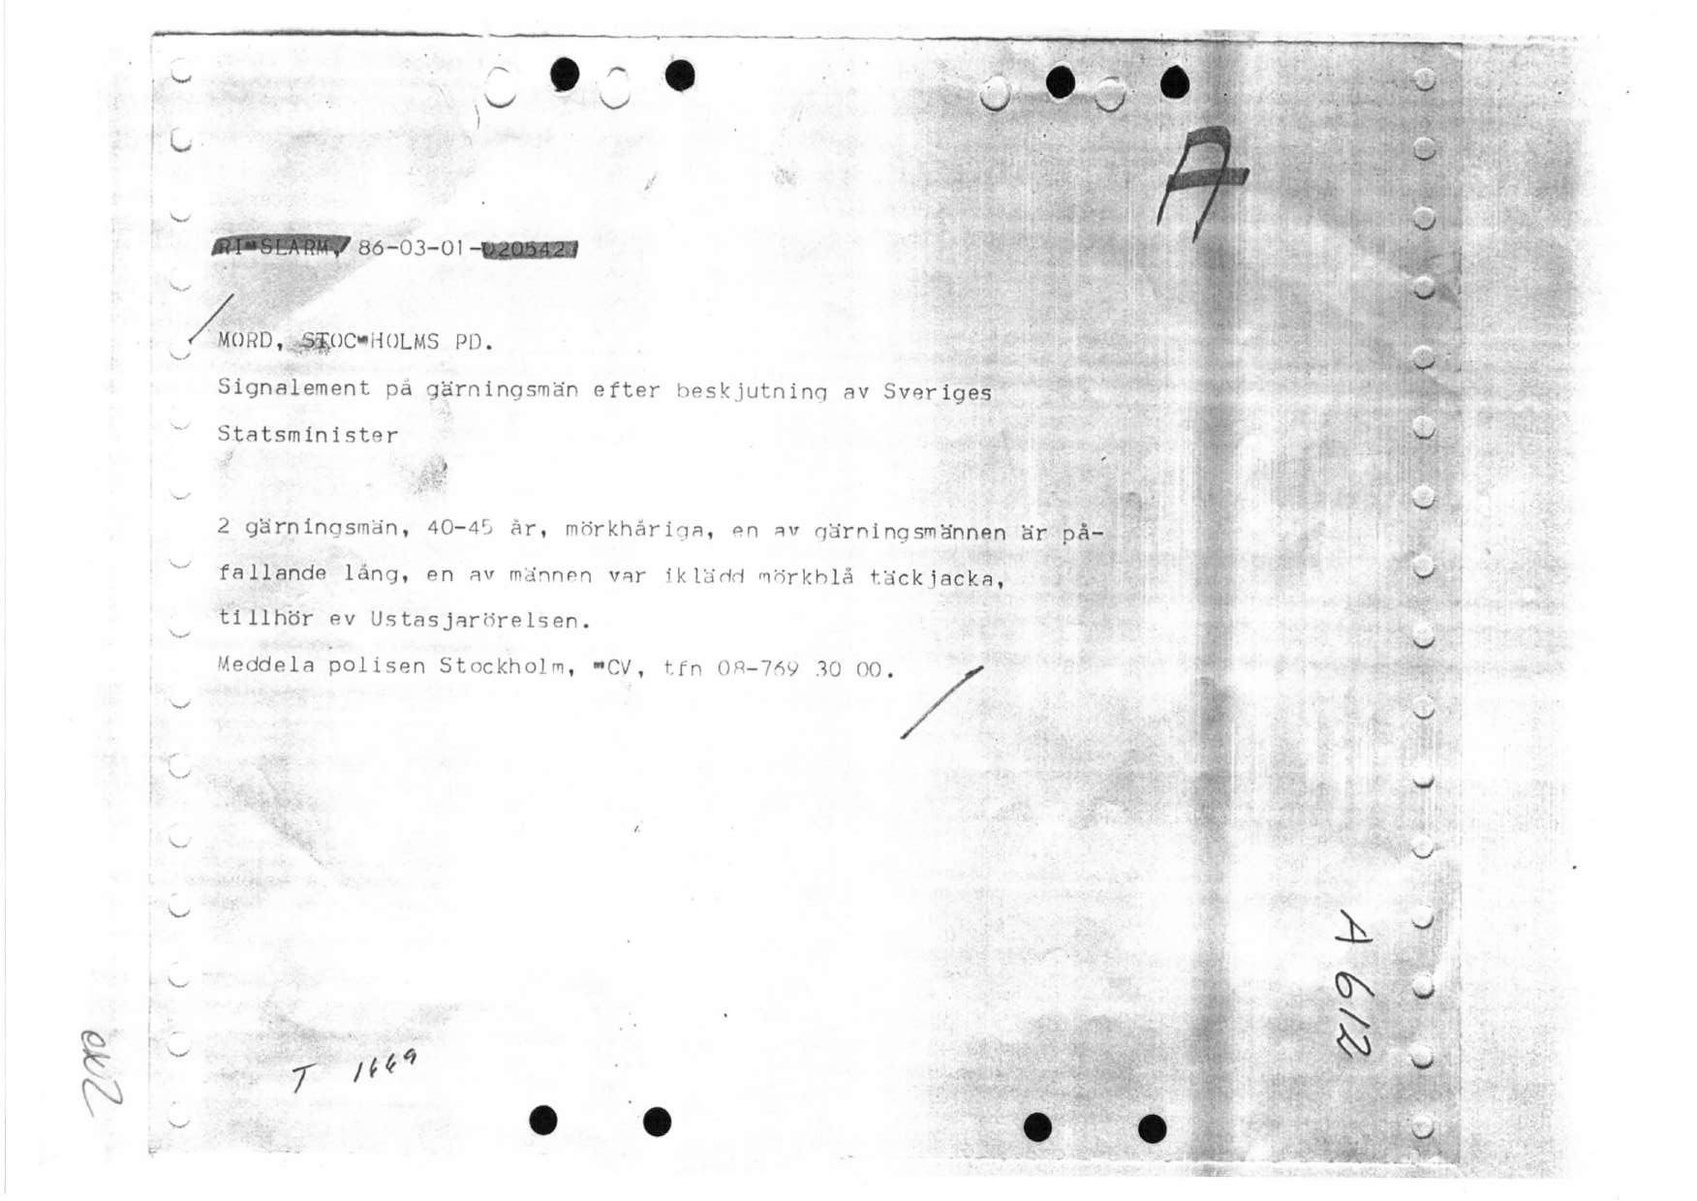 Pol-1986-03-01 0205 A612-00 Rikslarm Mordet på Olof Palme.pdf